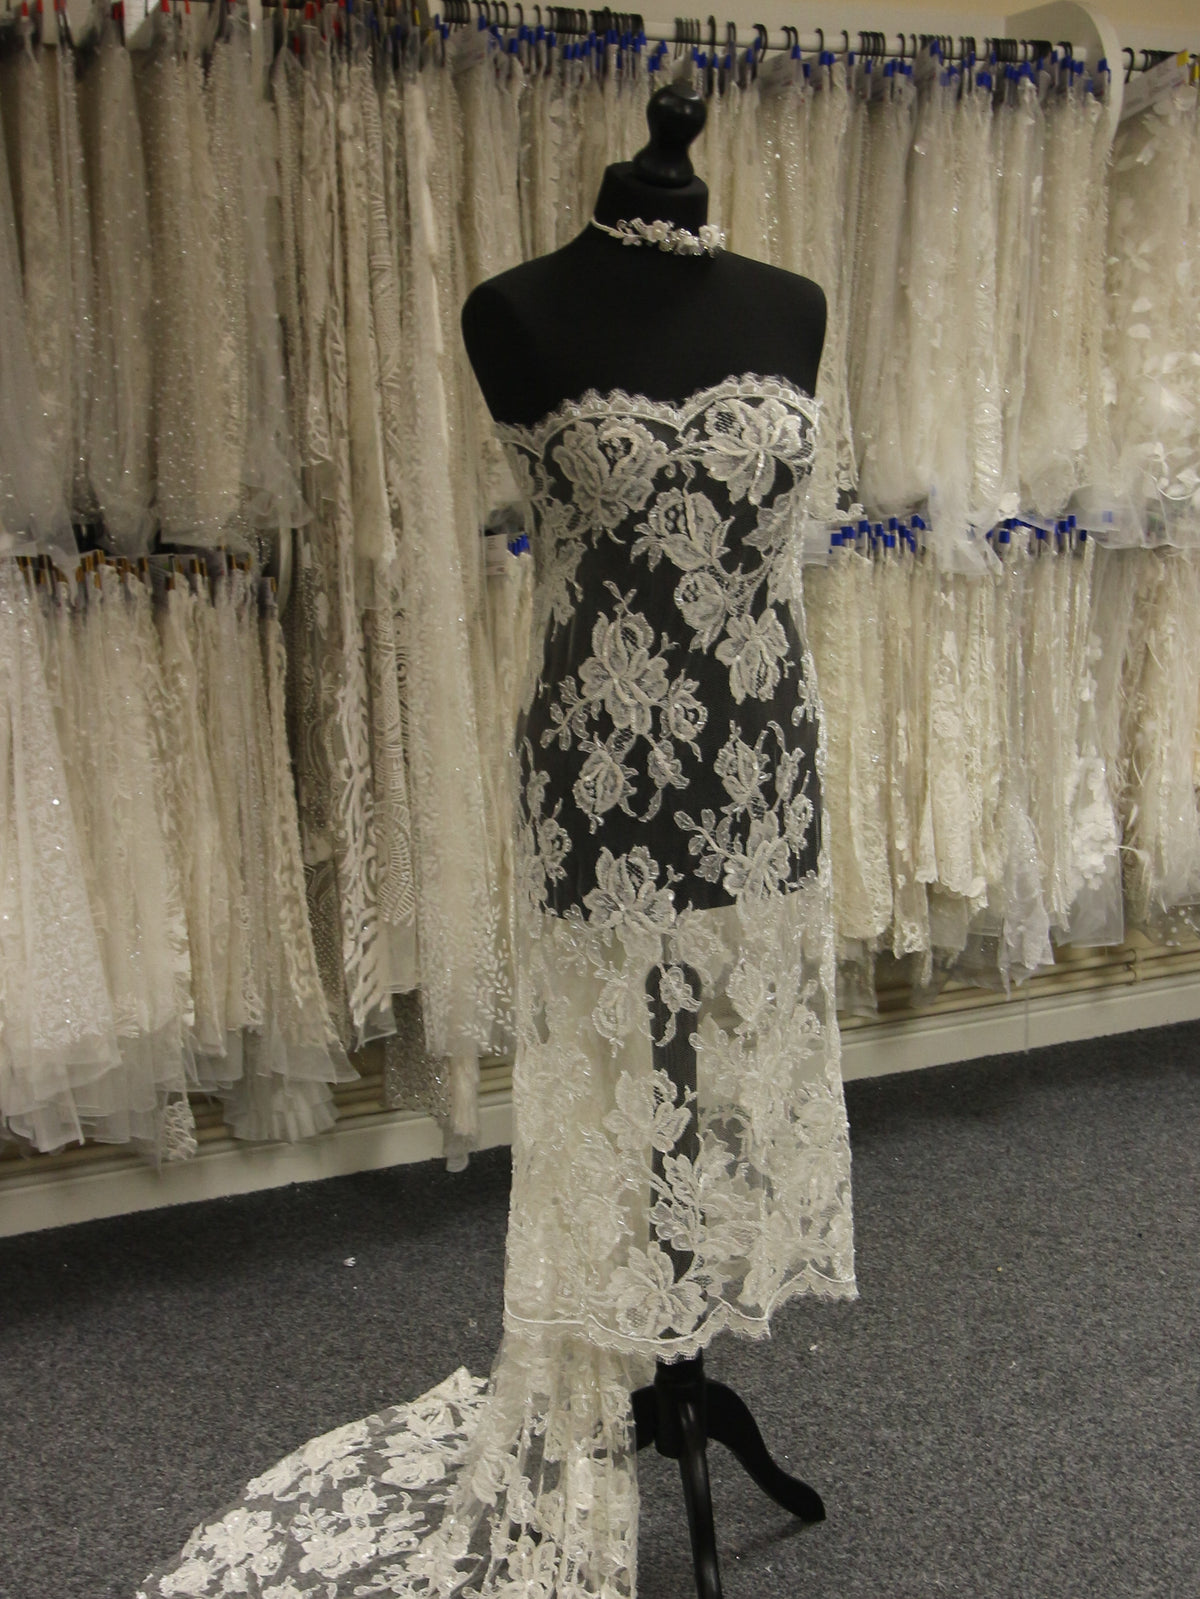 Chantilly Lace : French Lace - Bridal Fabrics